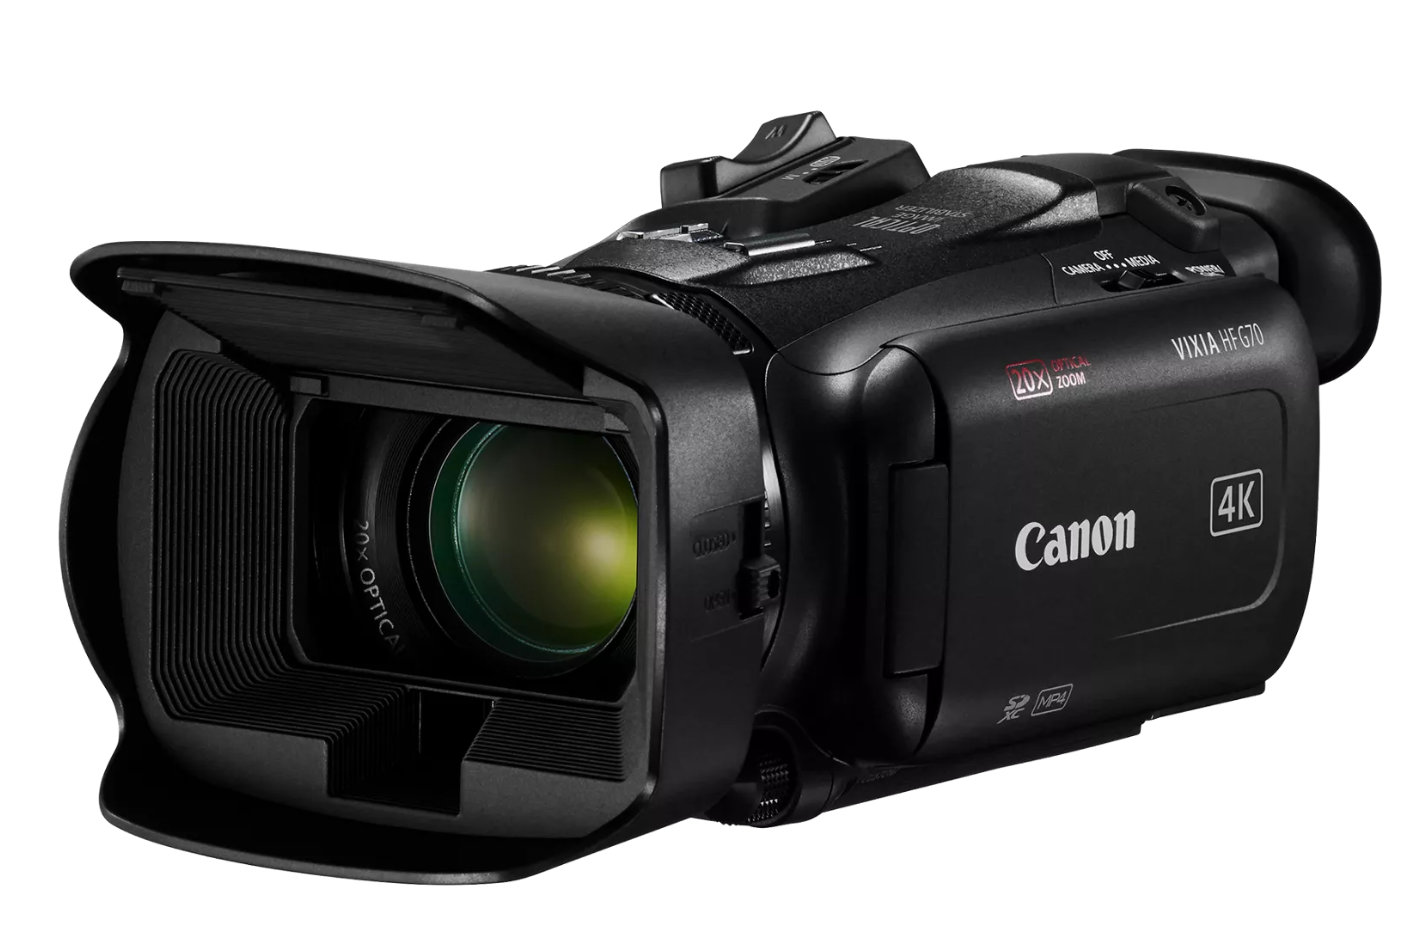 Canon adds enhanced features to Cinema EOS cameras